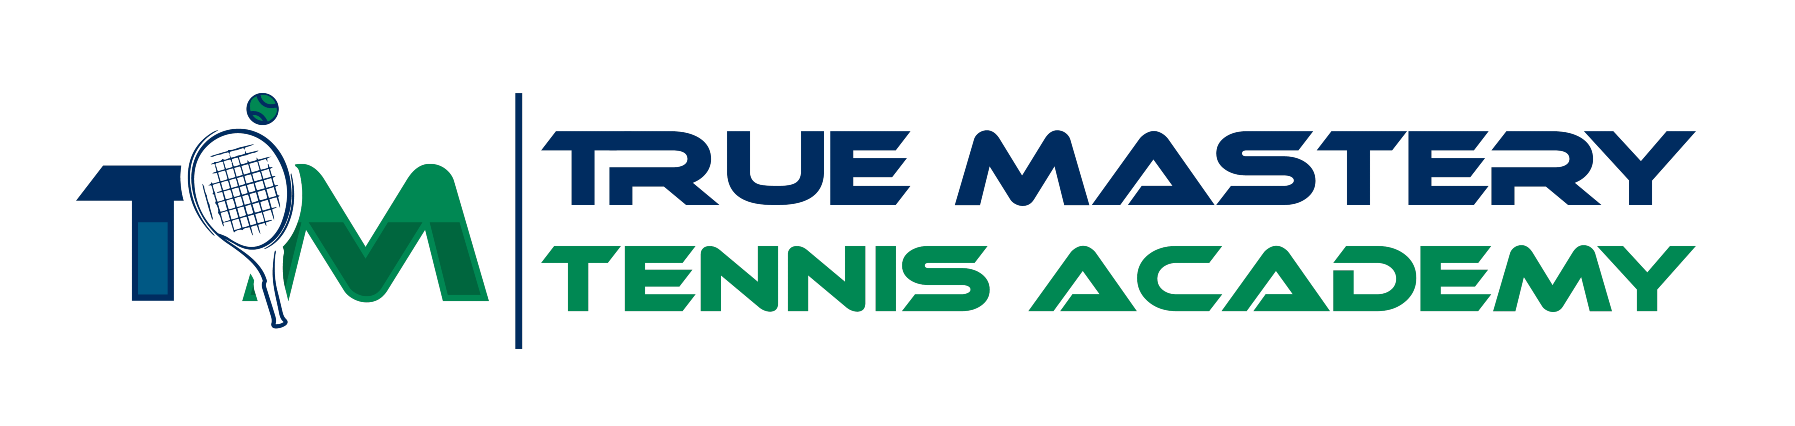 TM Tennis Academy True Mastery Tennis Academy Singapore